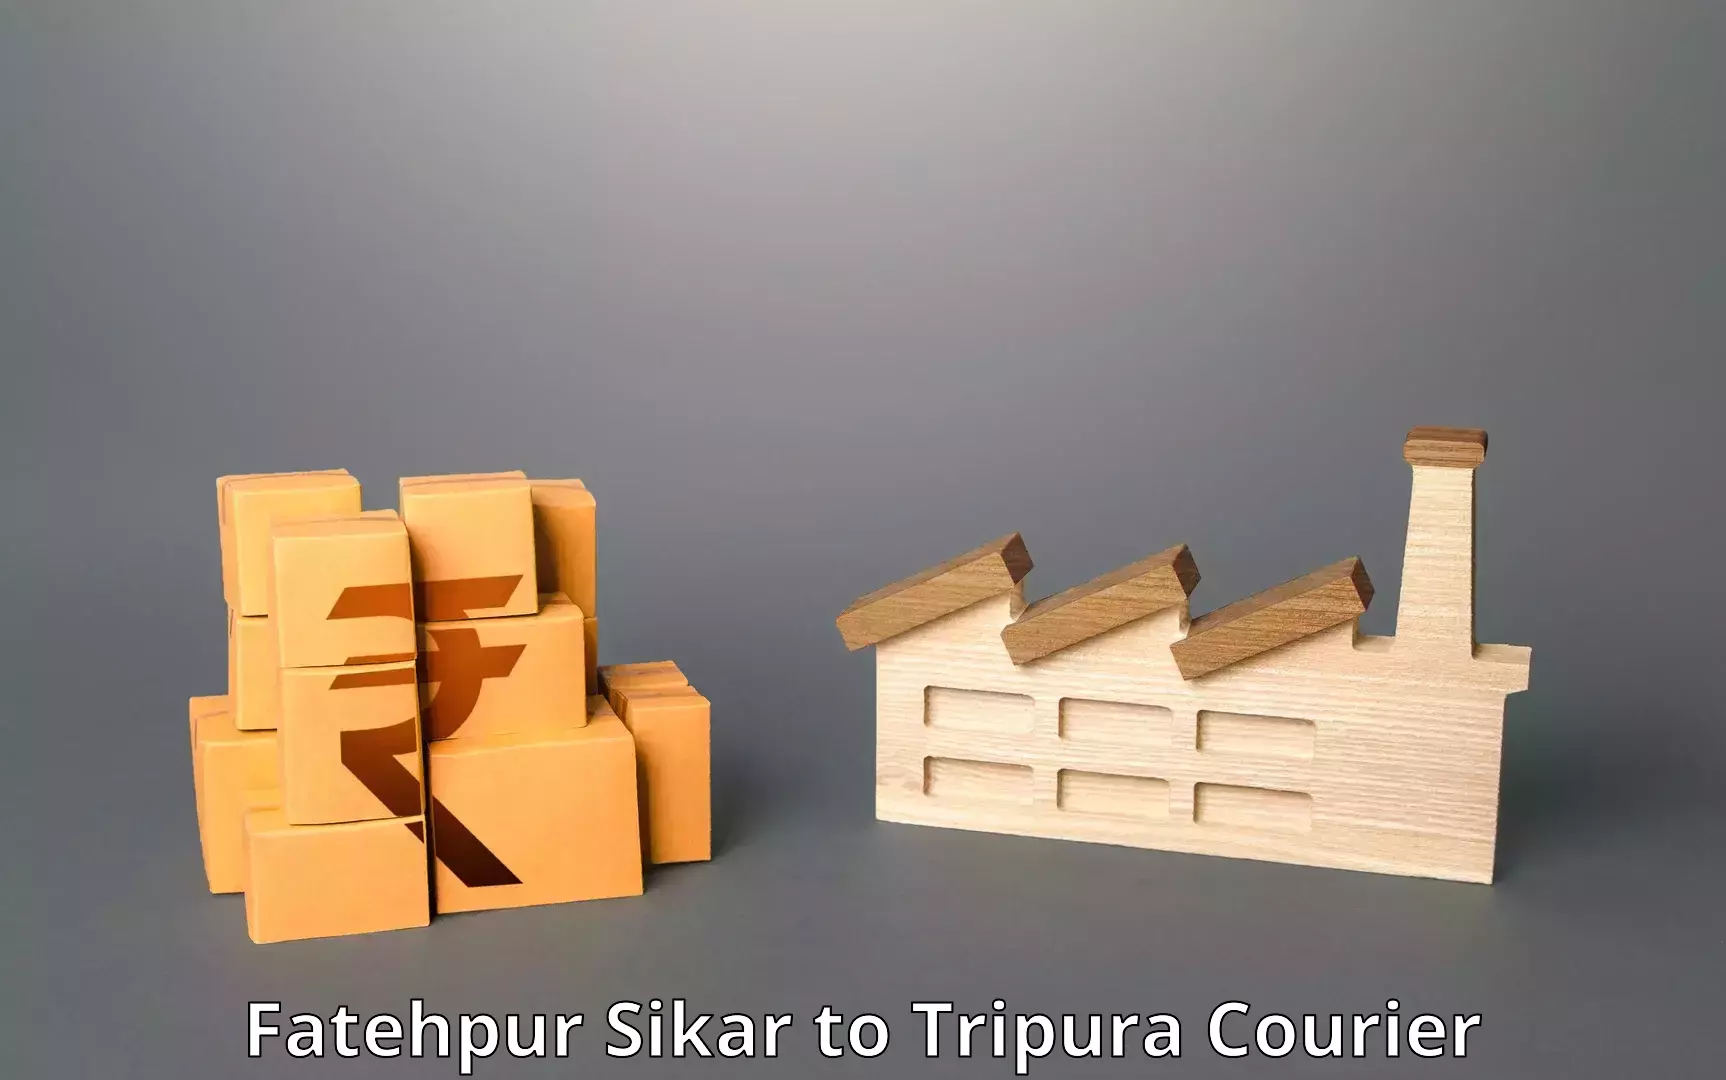 Tech-enabled shipping in Fatehpur Sikar to Udaipur Tripura